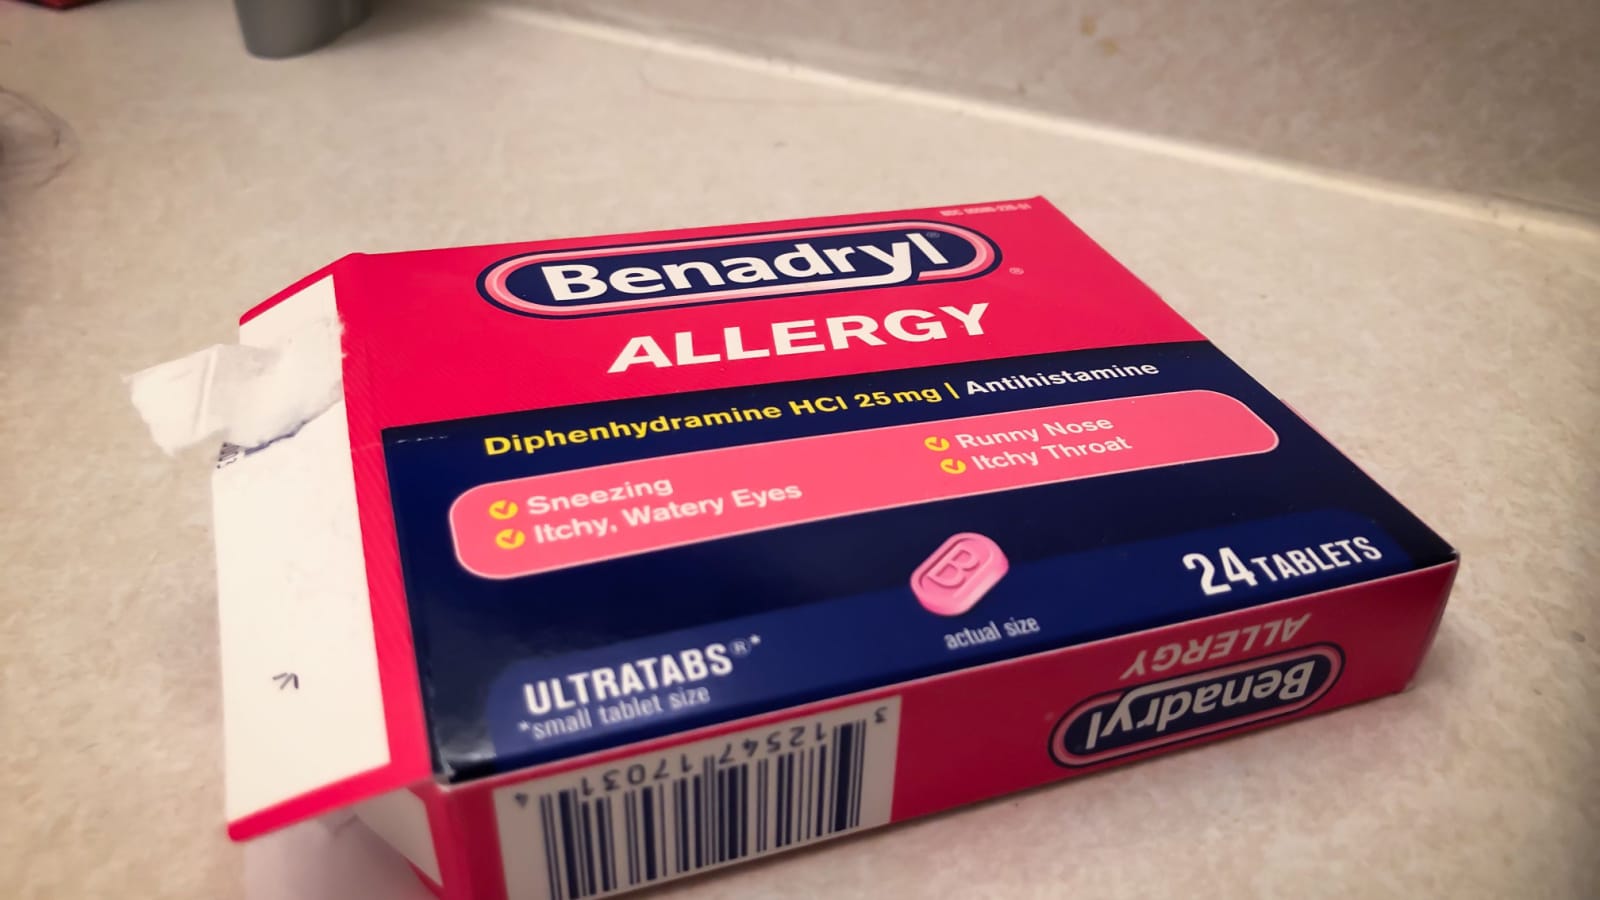 Birmingham, AL / USA - August 4, 2020: Opened box of Benadryl Allergy medication. 24 tablet count - 25mg